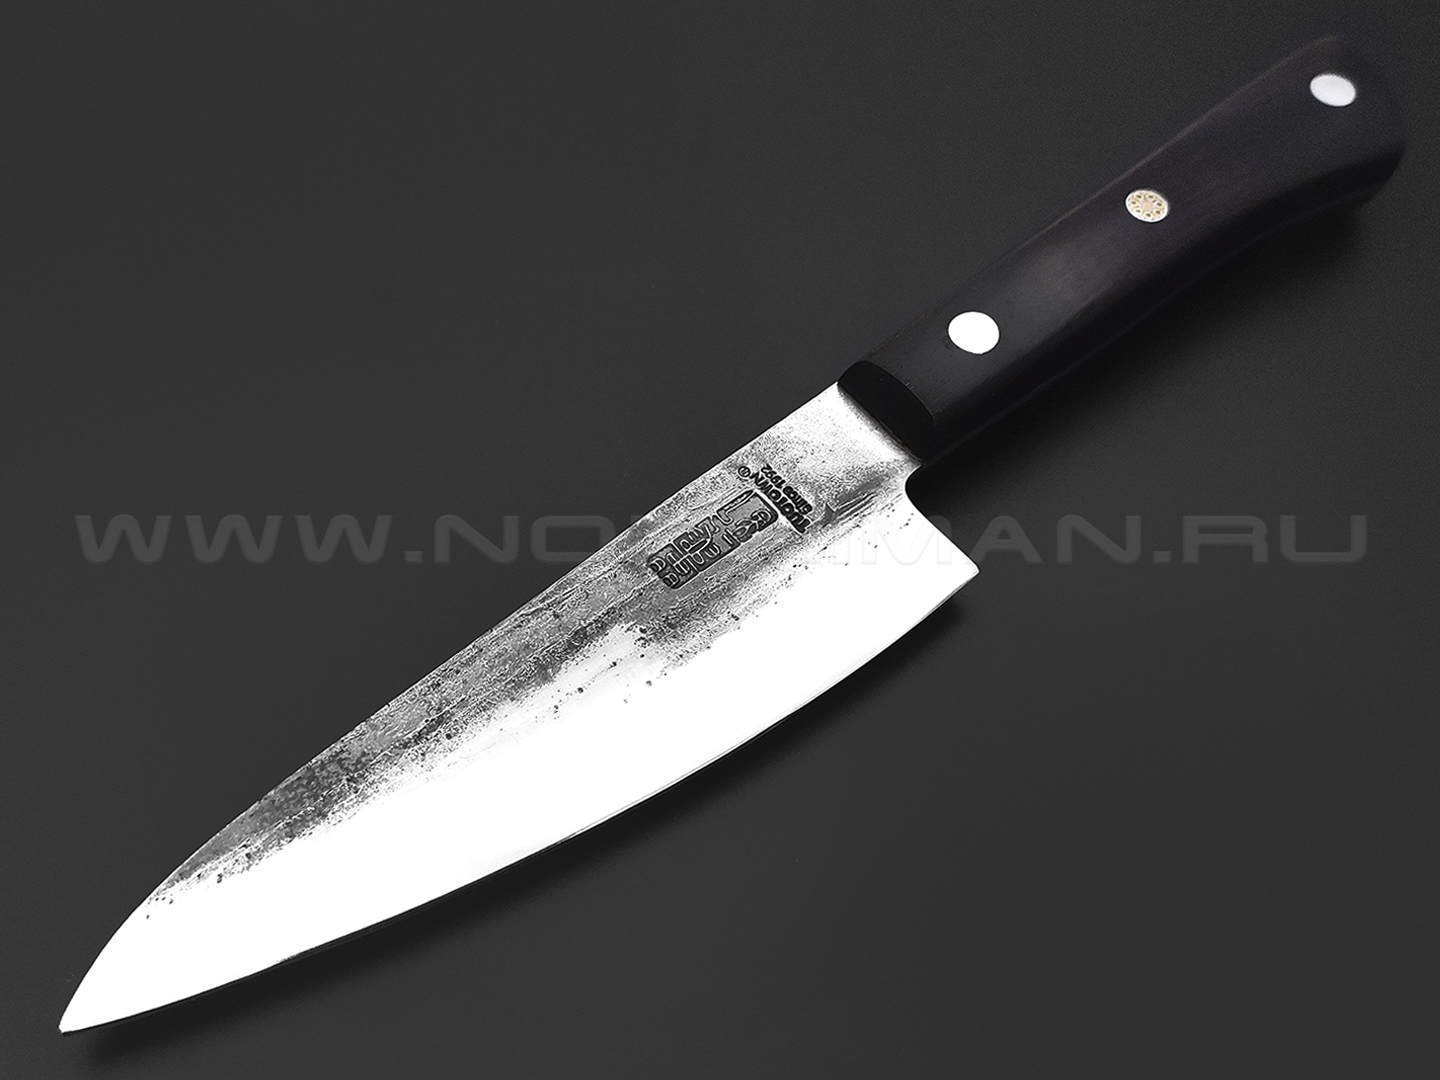 TuoTown кованый нож Chefs 13 см 185011 сталь Aus-10, рукоять Сандаловое дерево